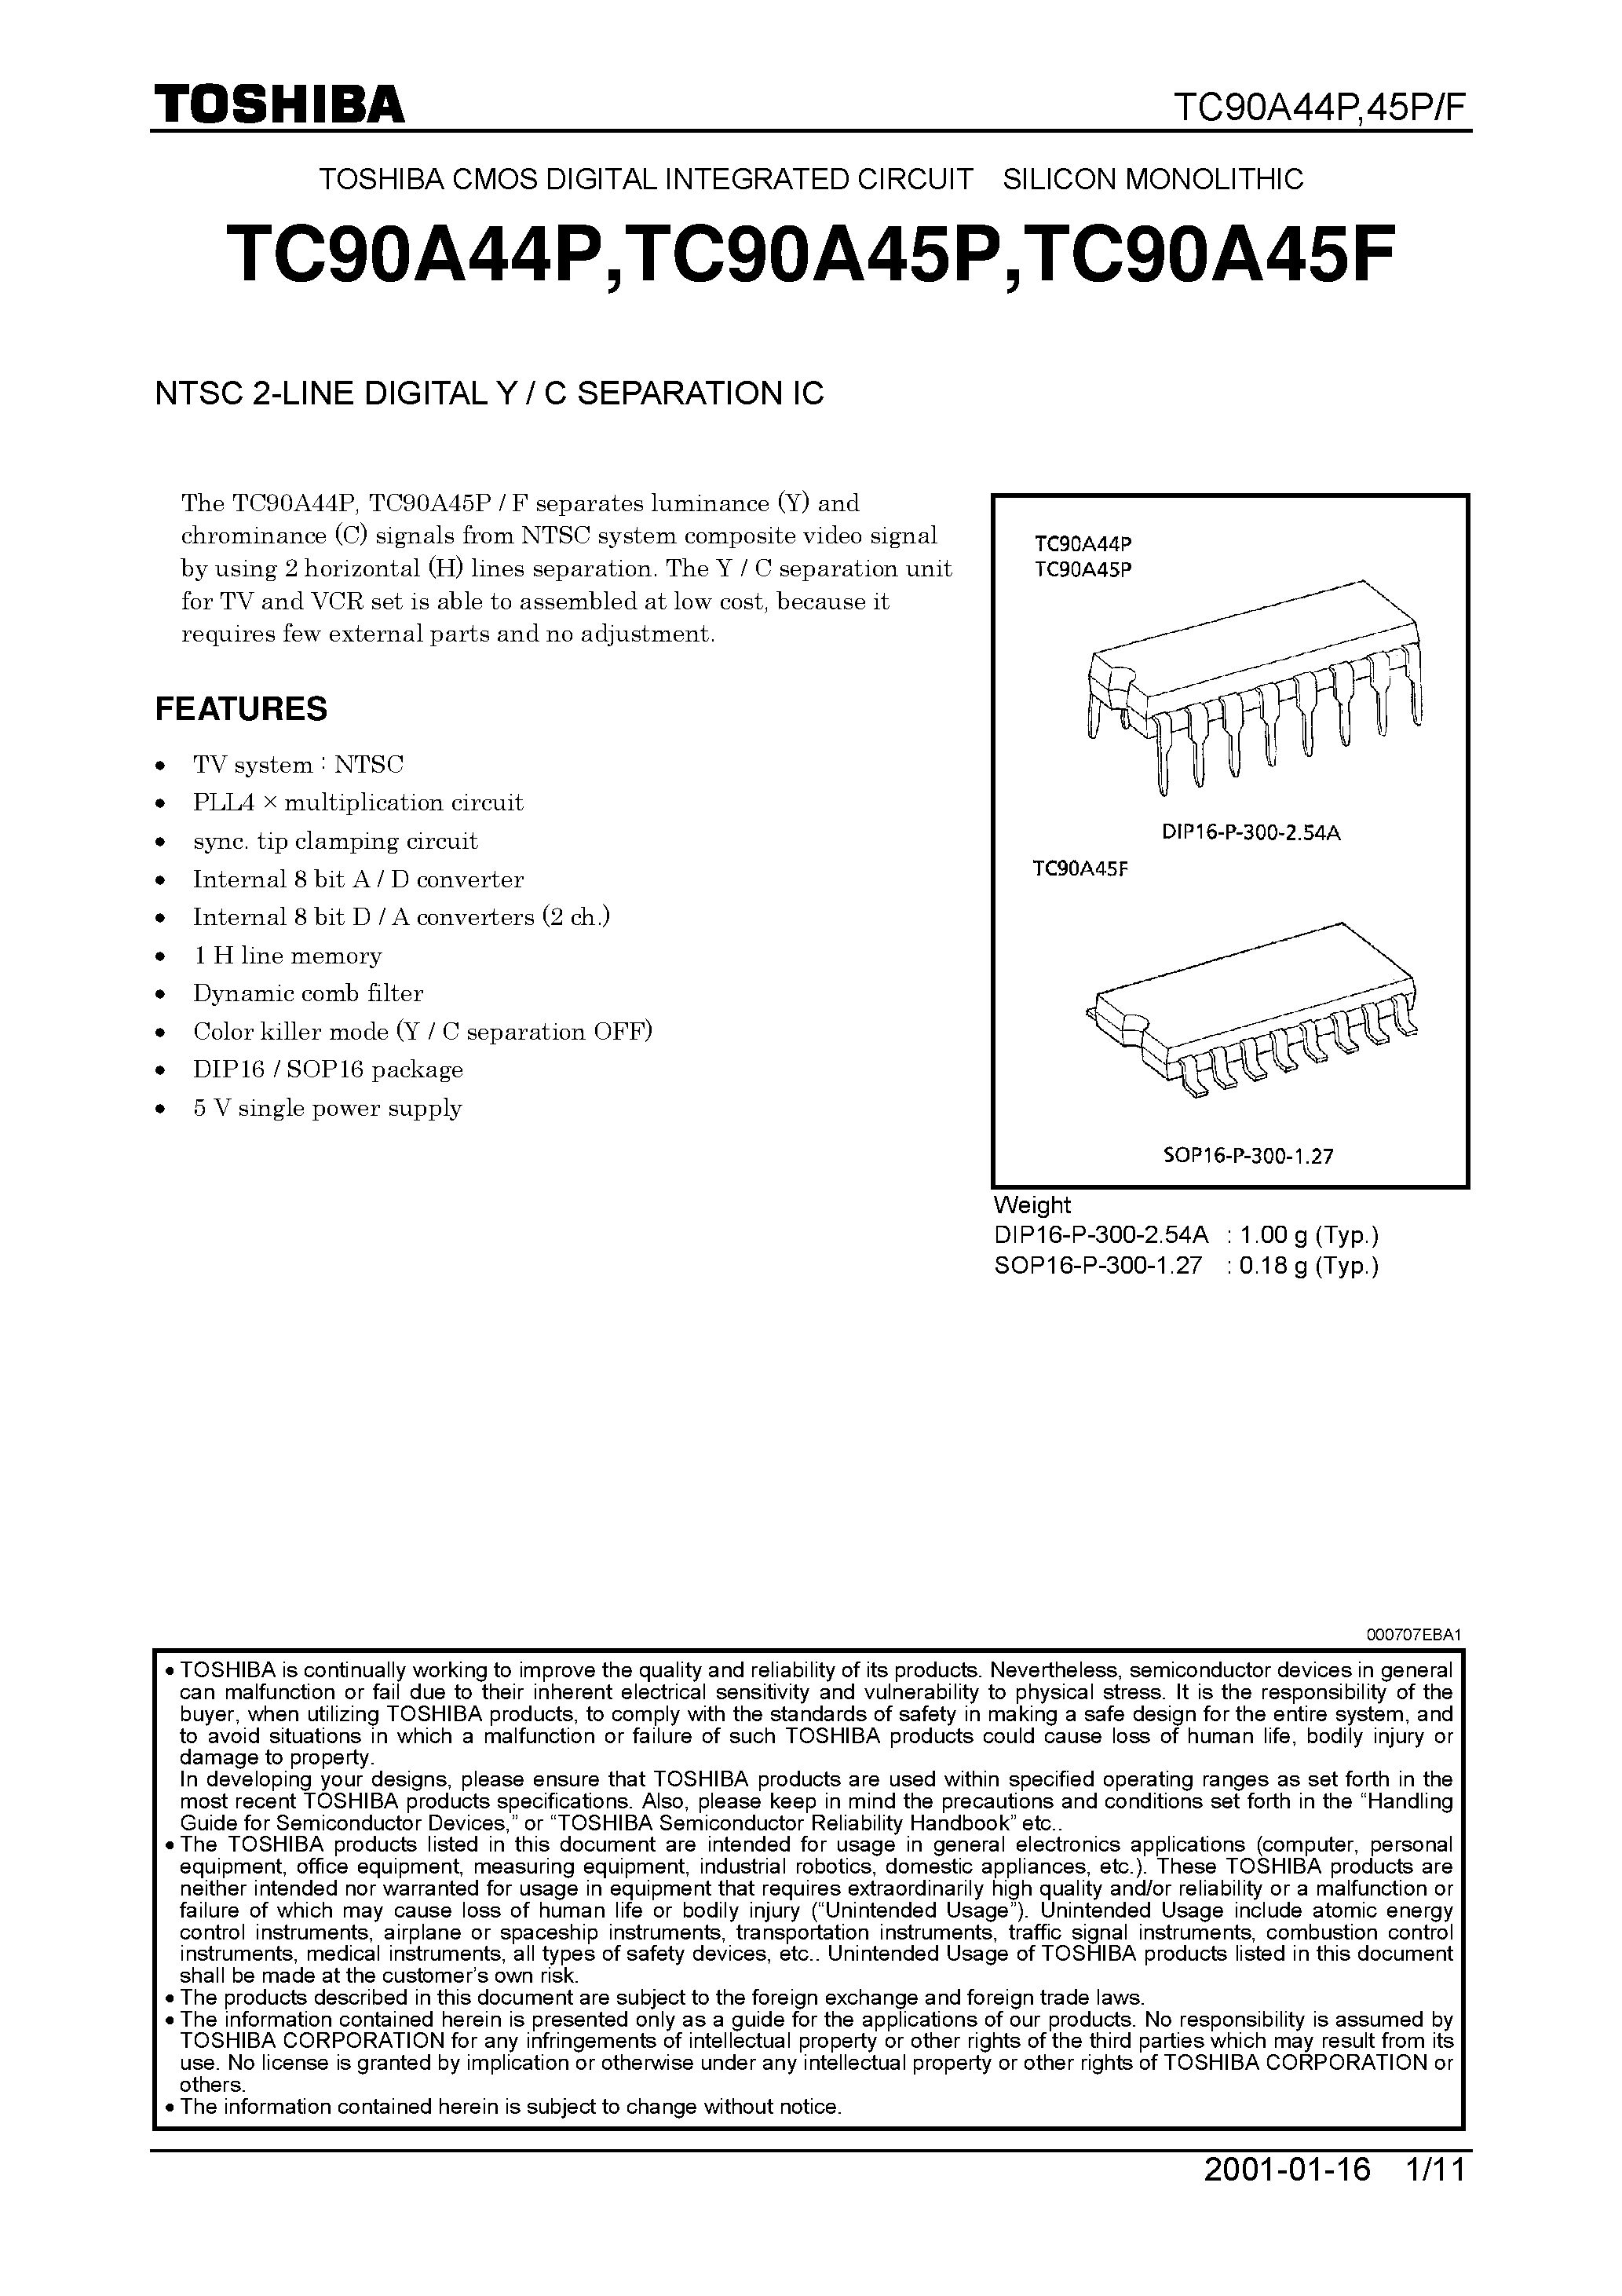 Datasheet TC90A45P - NTSC 2-LINE DIGITAL Y / C SEPARATION IC page 1